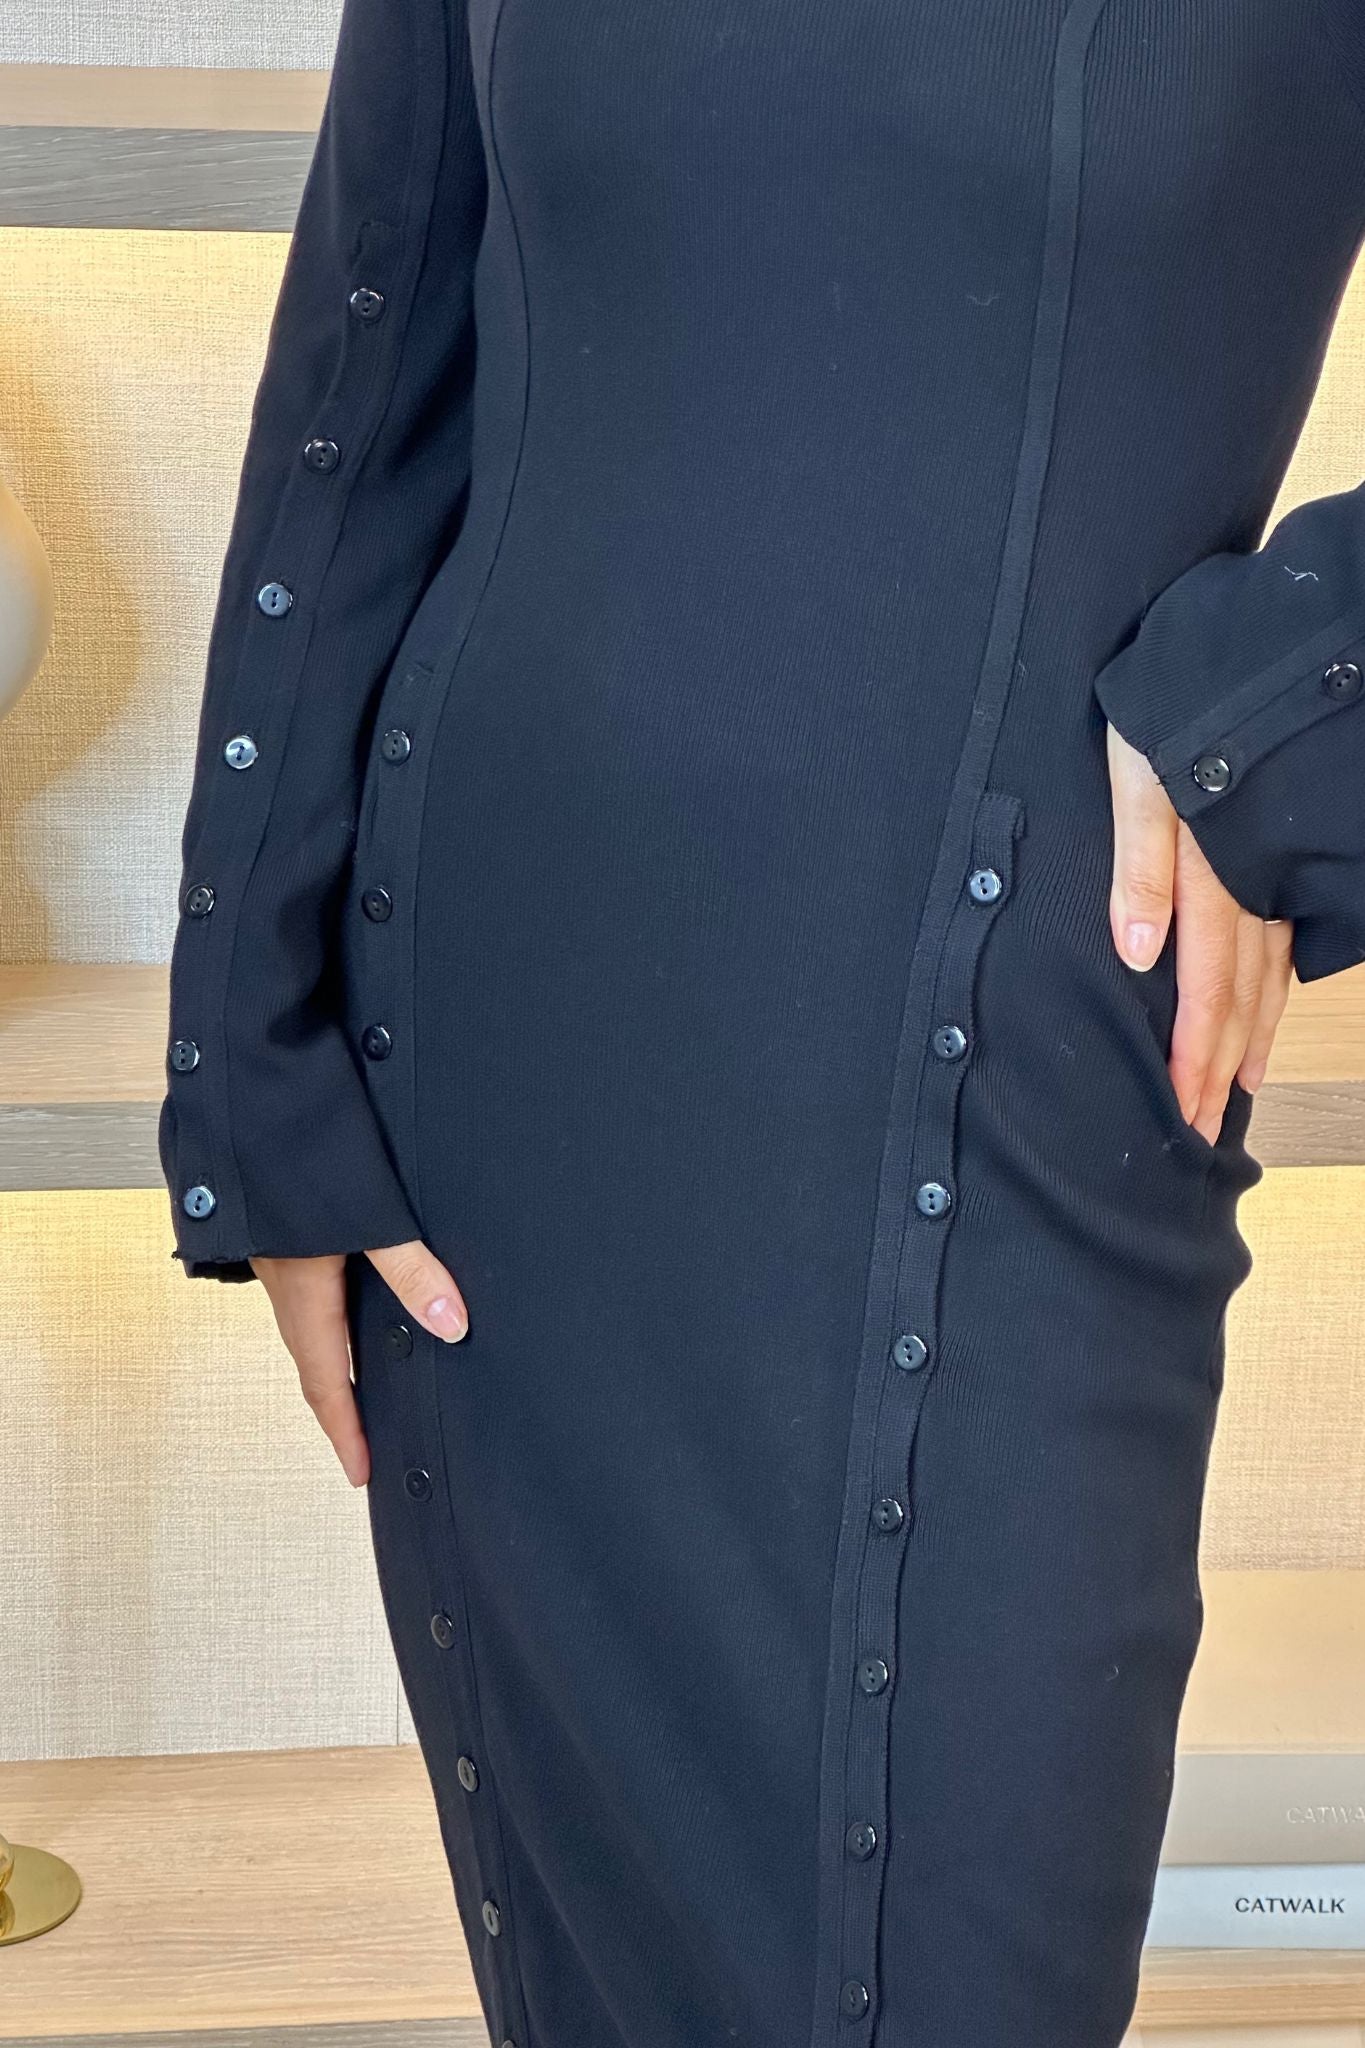 Holly Button Detail Knit Midi Dress In Black - The Walk in Wardrobe